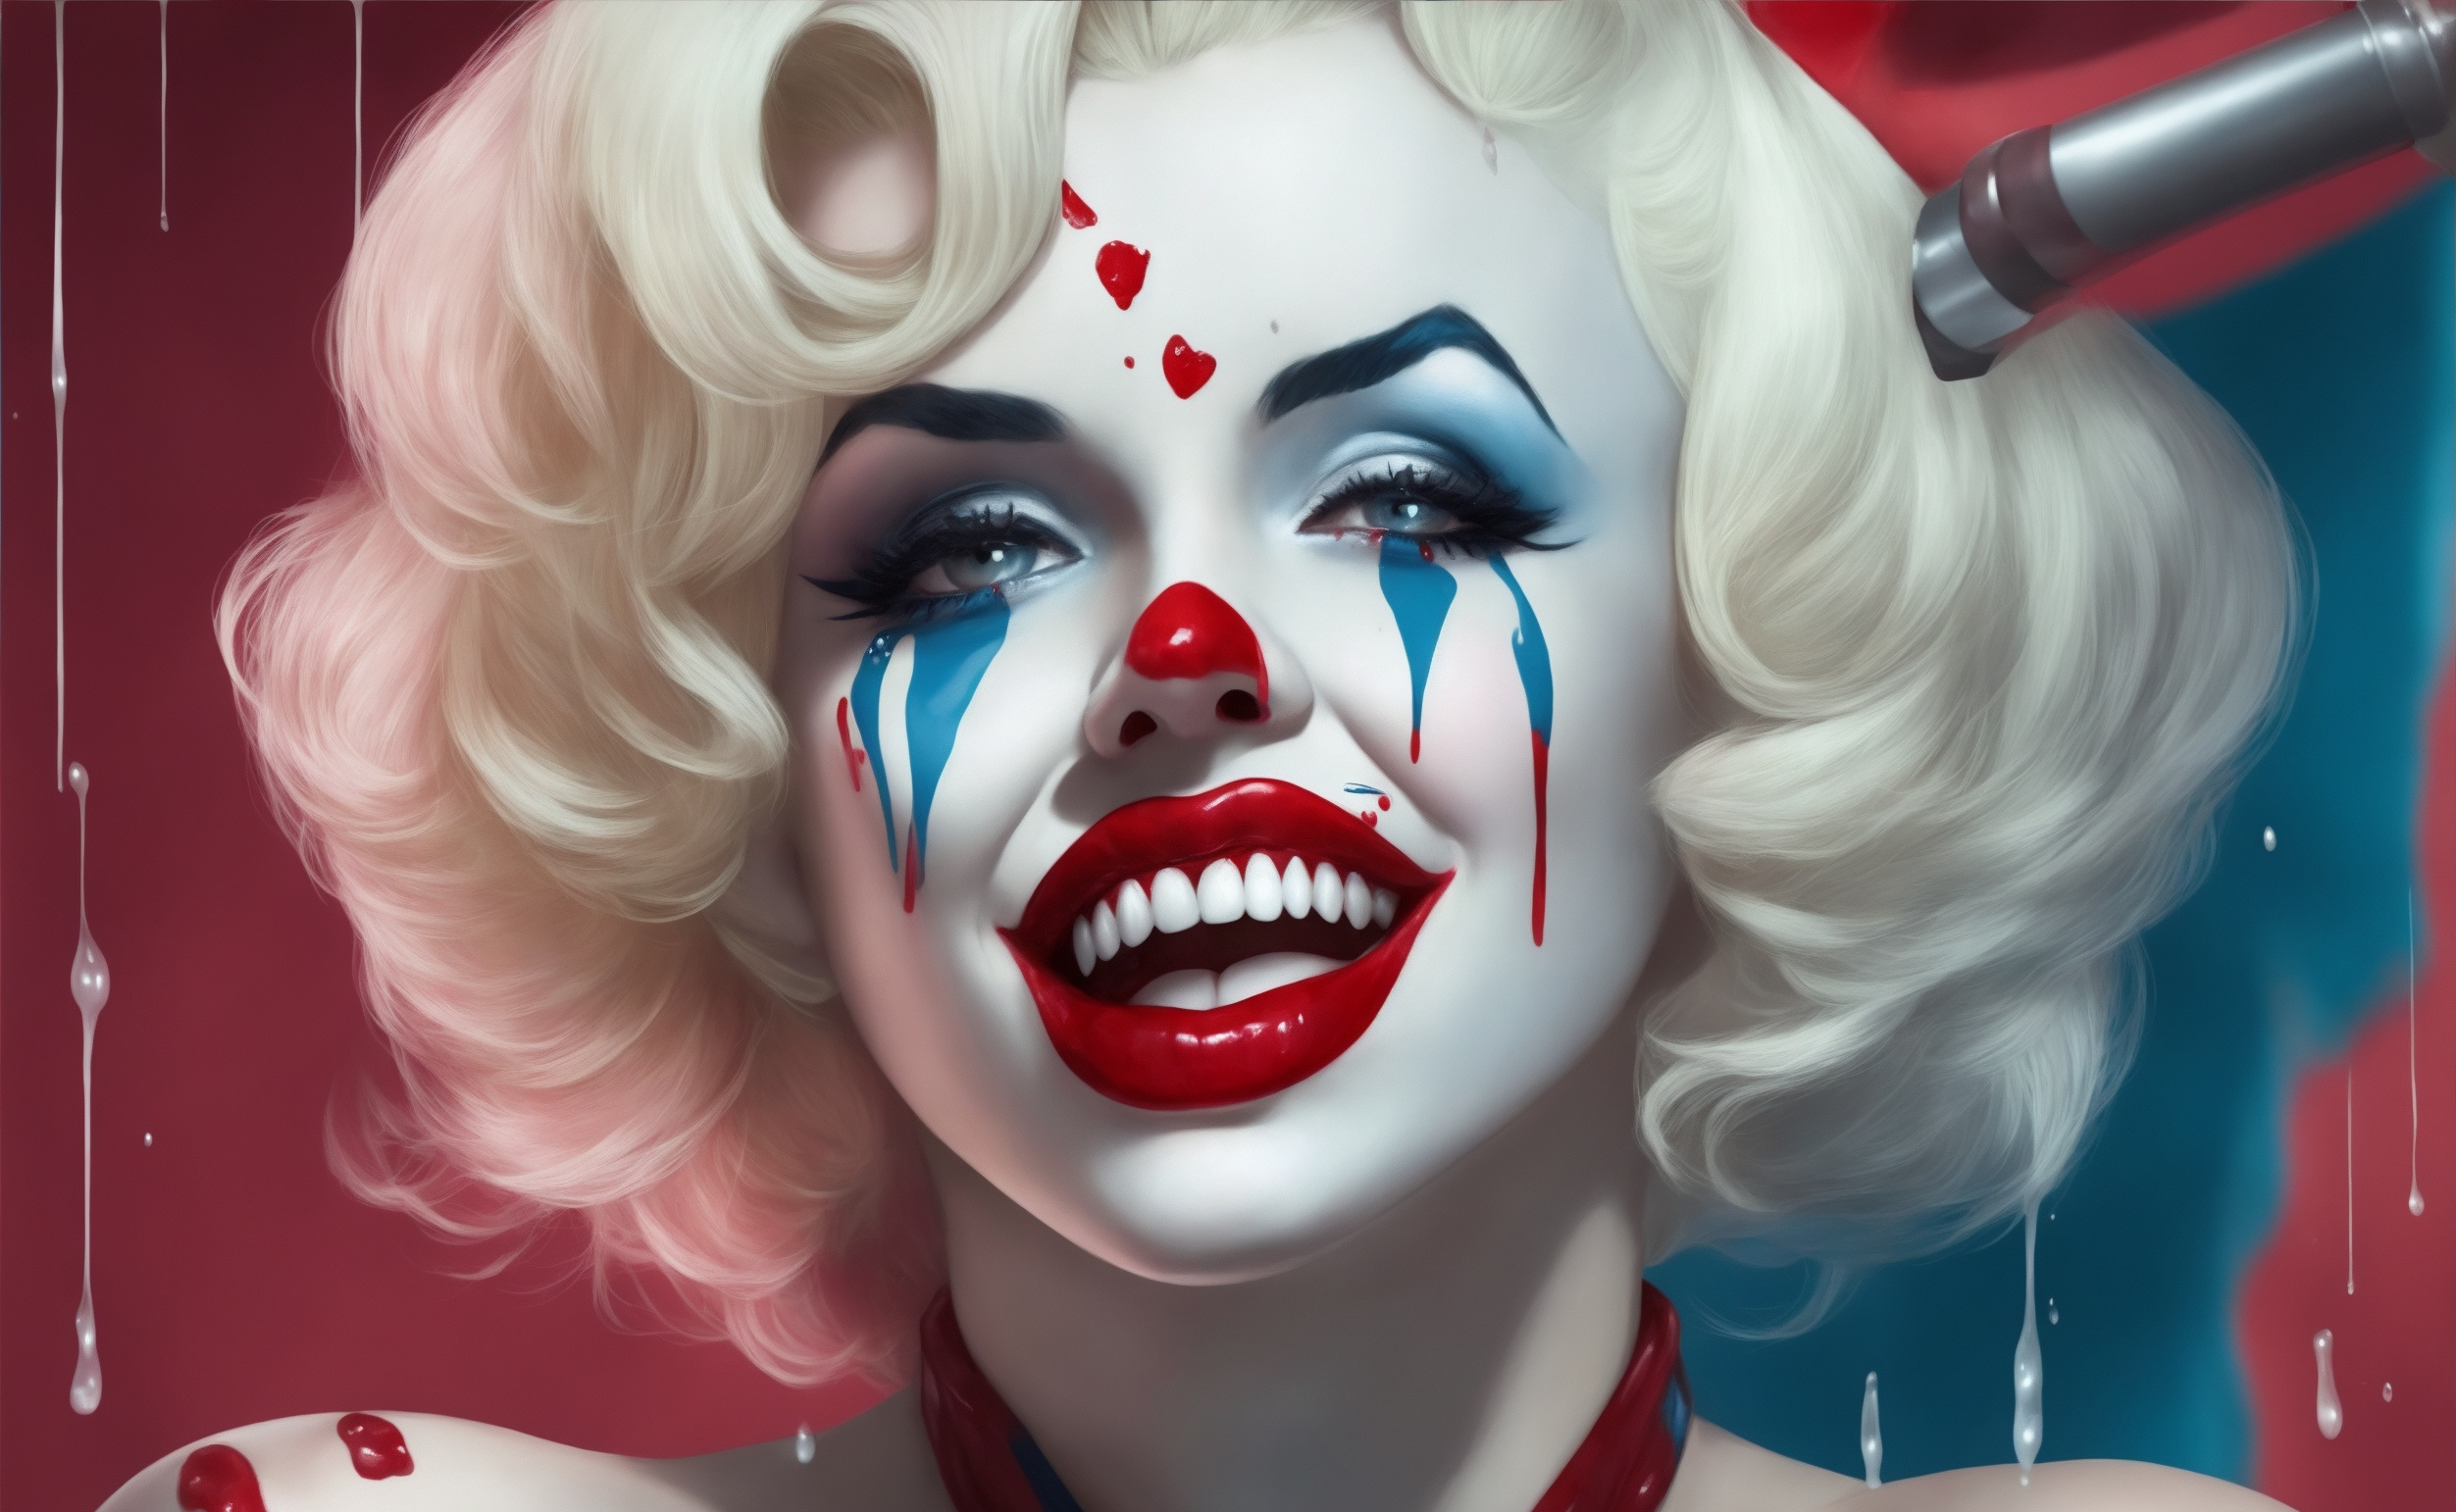 We ain’t clownin’ – the most lucarative metaverse